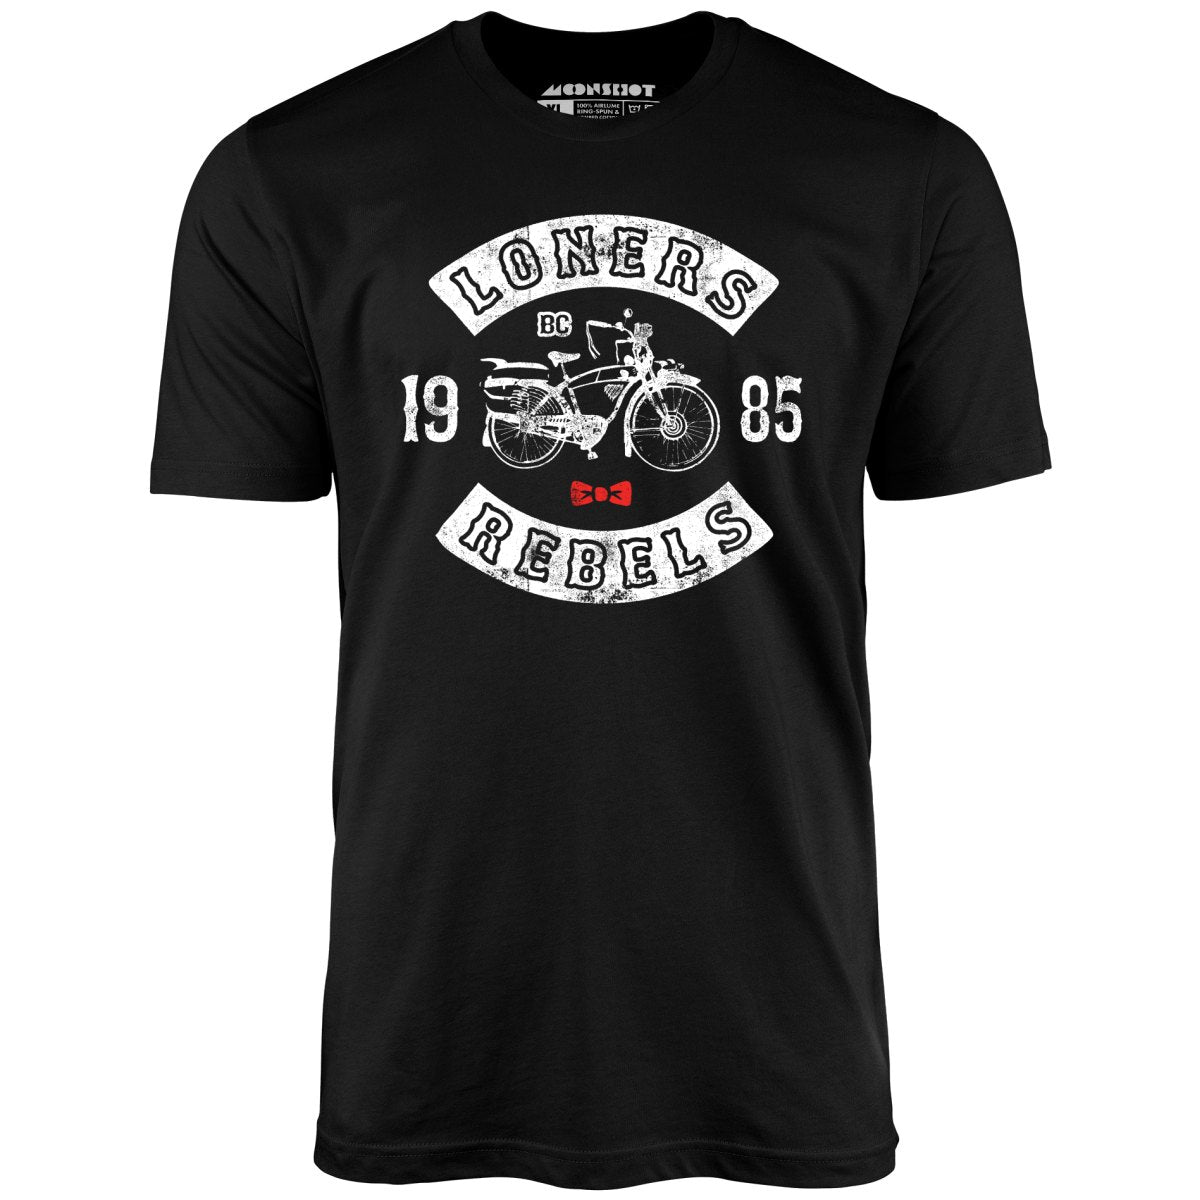 Loners & Rebels Bicycle Club - Unisex T-Shirt